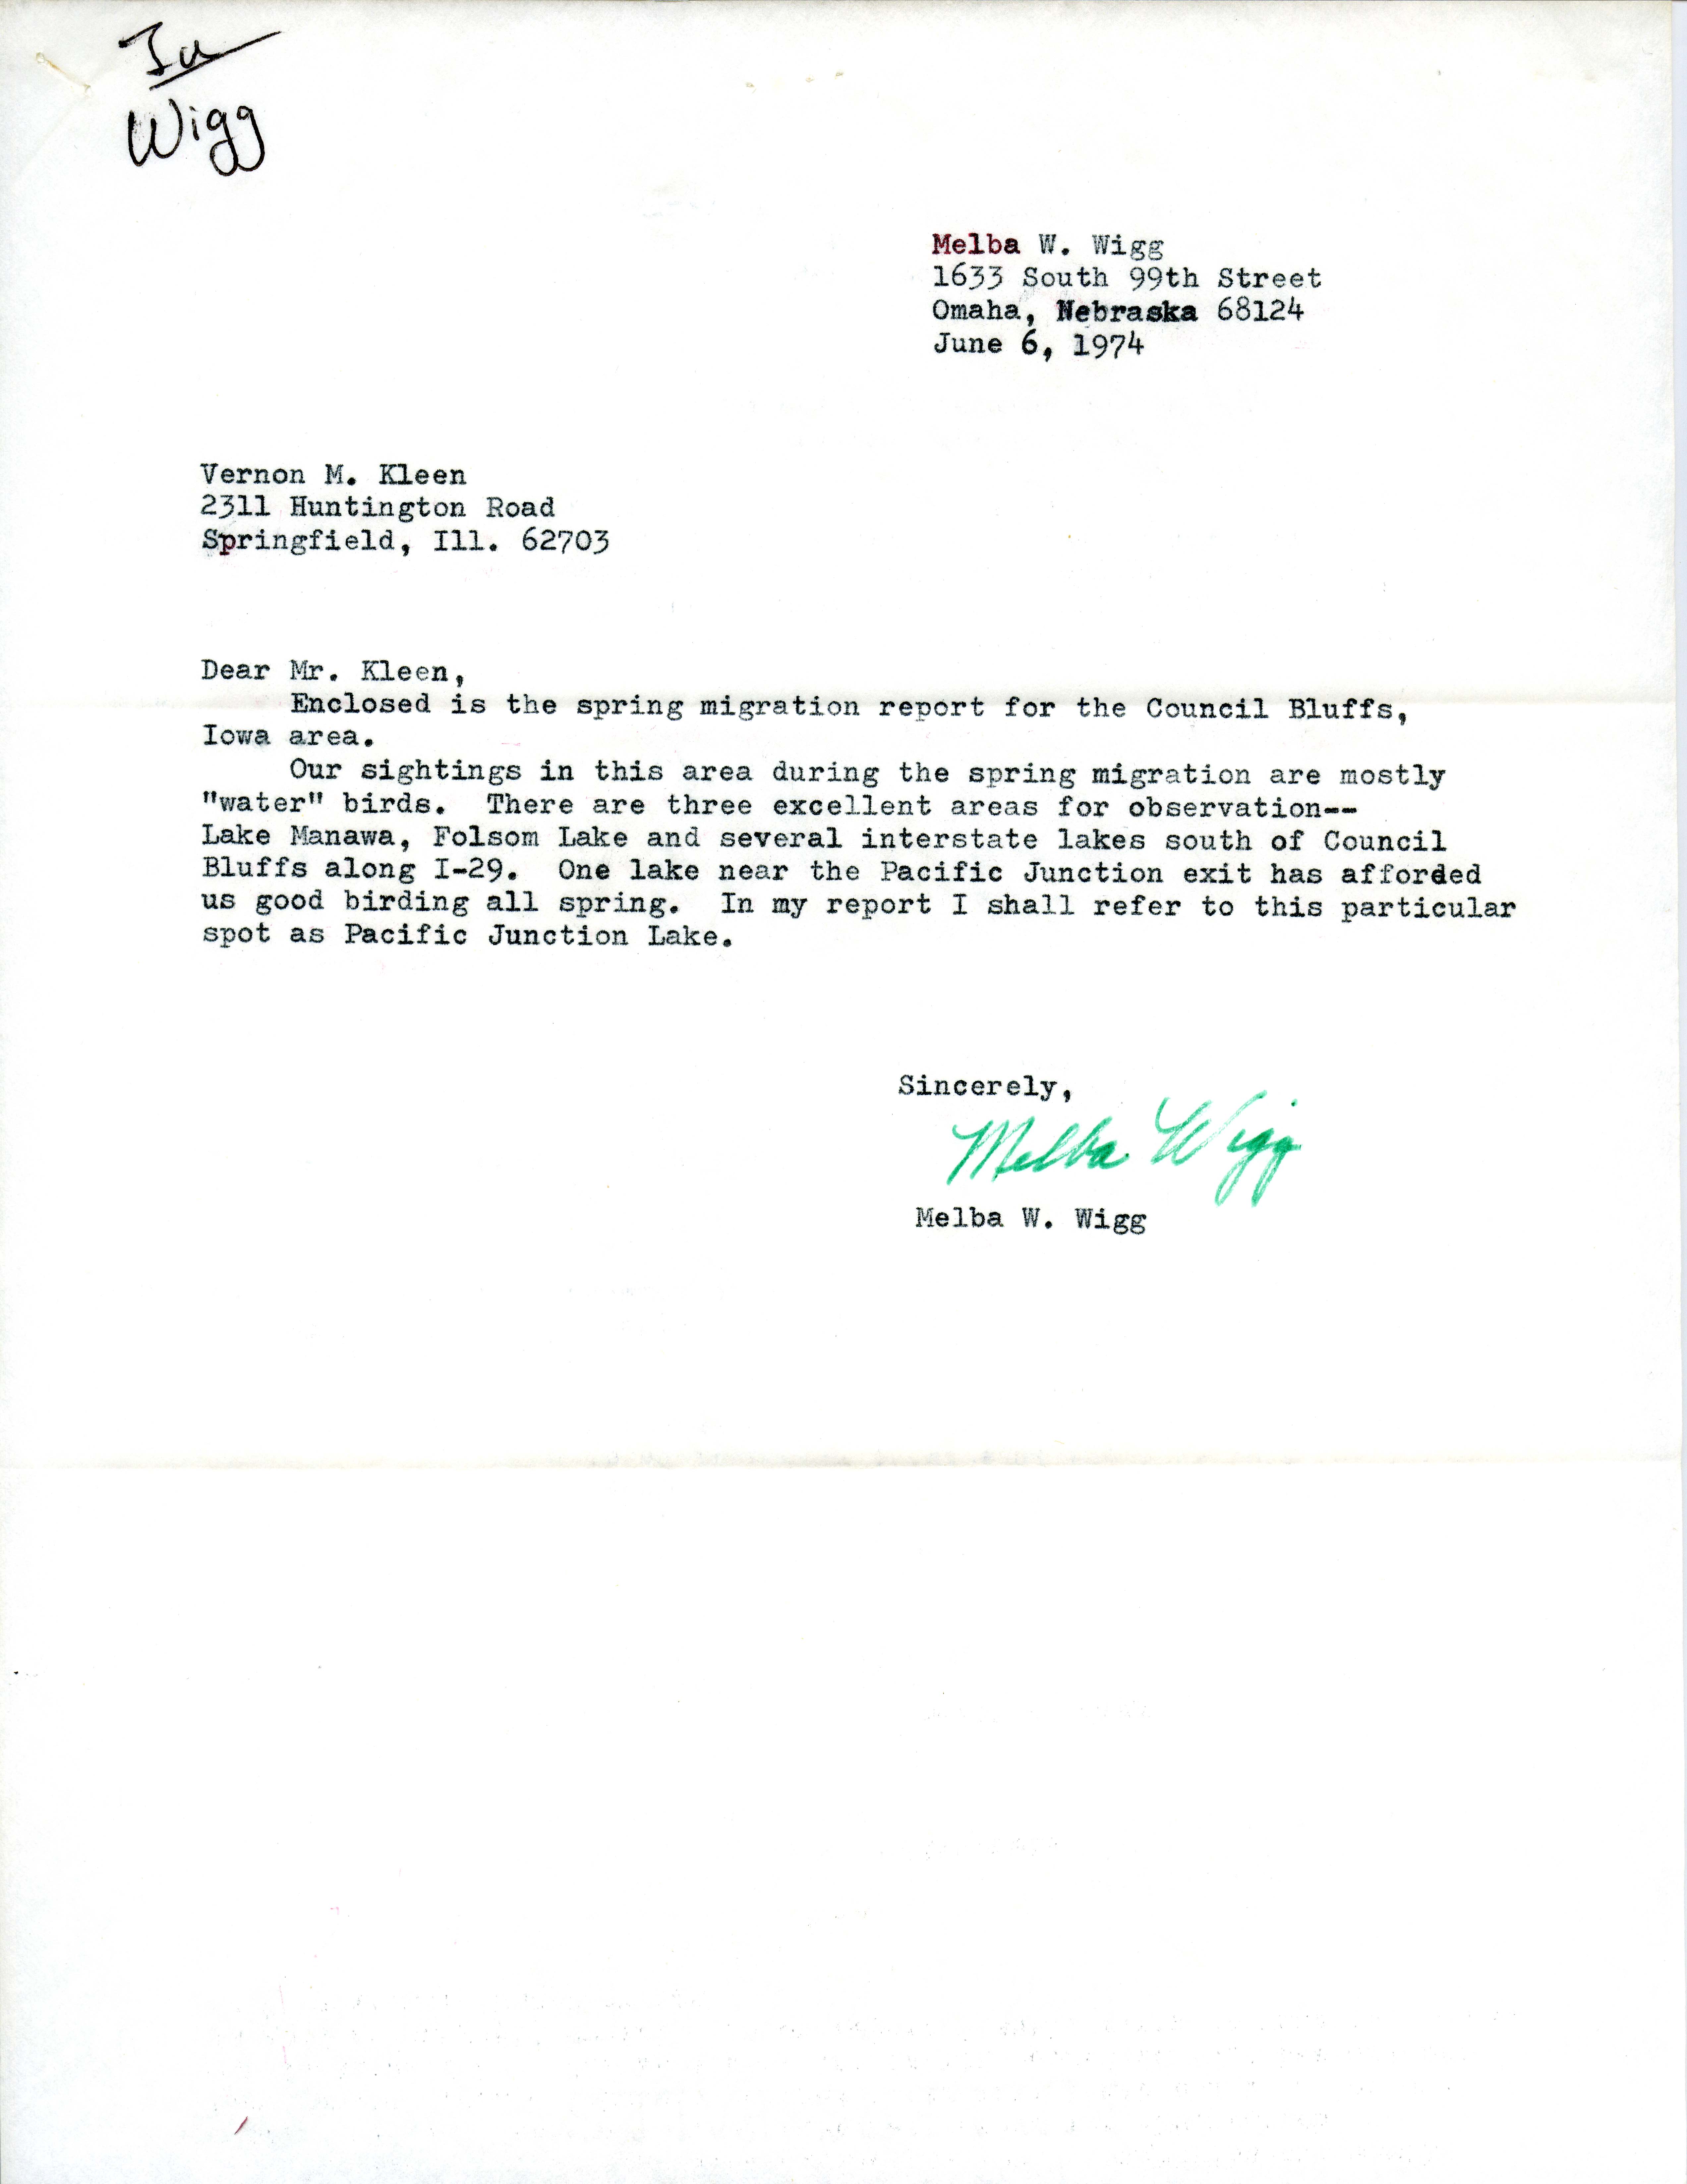 Melba Wigg letter and report to Vernon M. Kleen regarding spring migration bird sightings near Council Bluffs, June 6, 1974